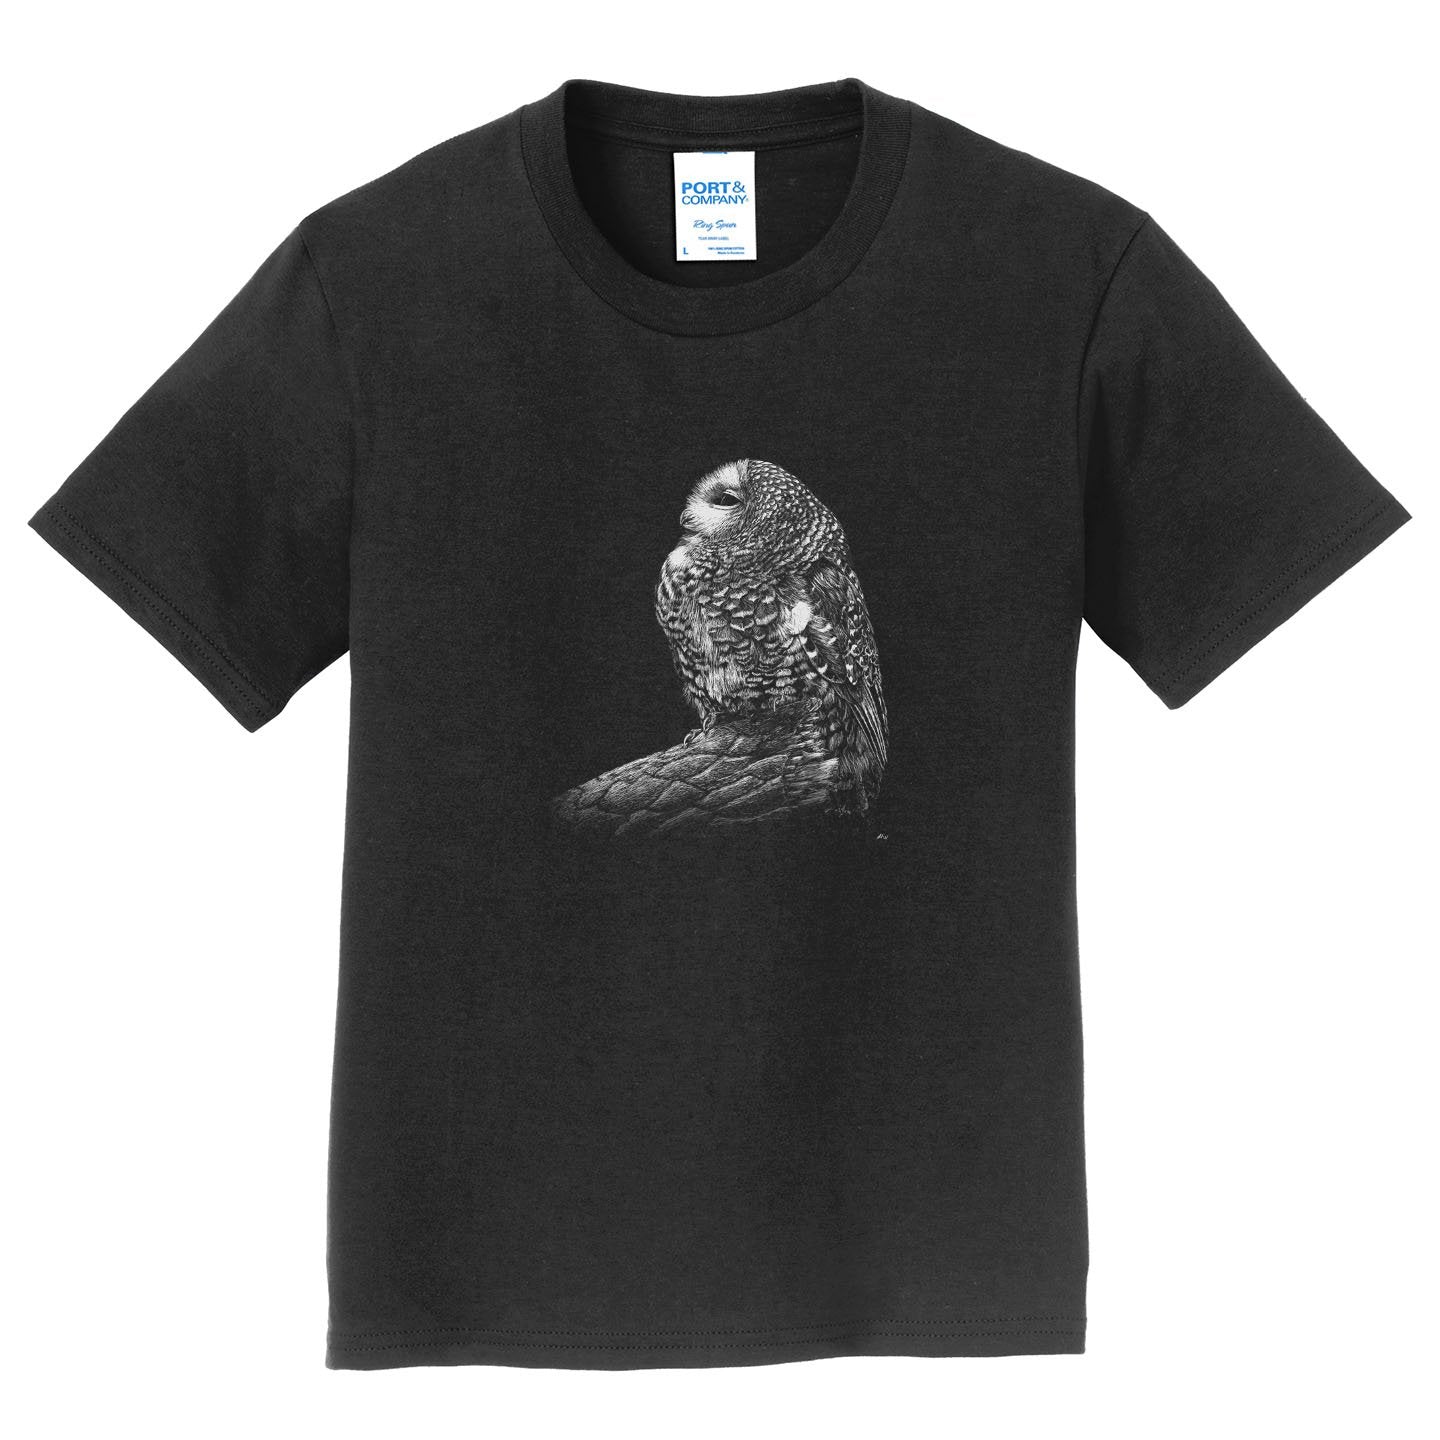 Spotted Owl on Black - Kids' Unisex T-Shirt